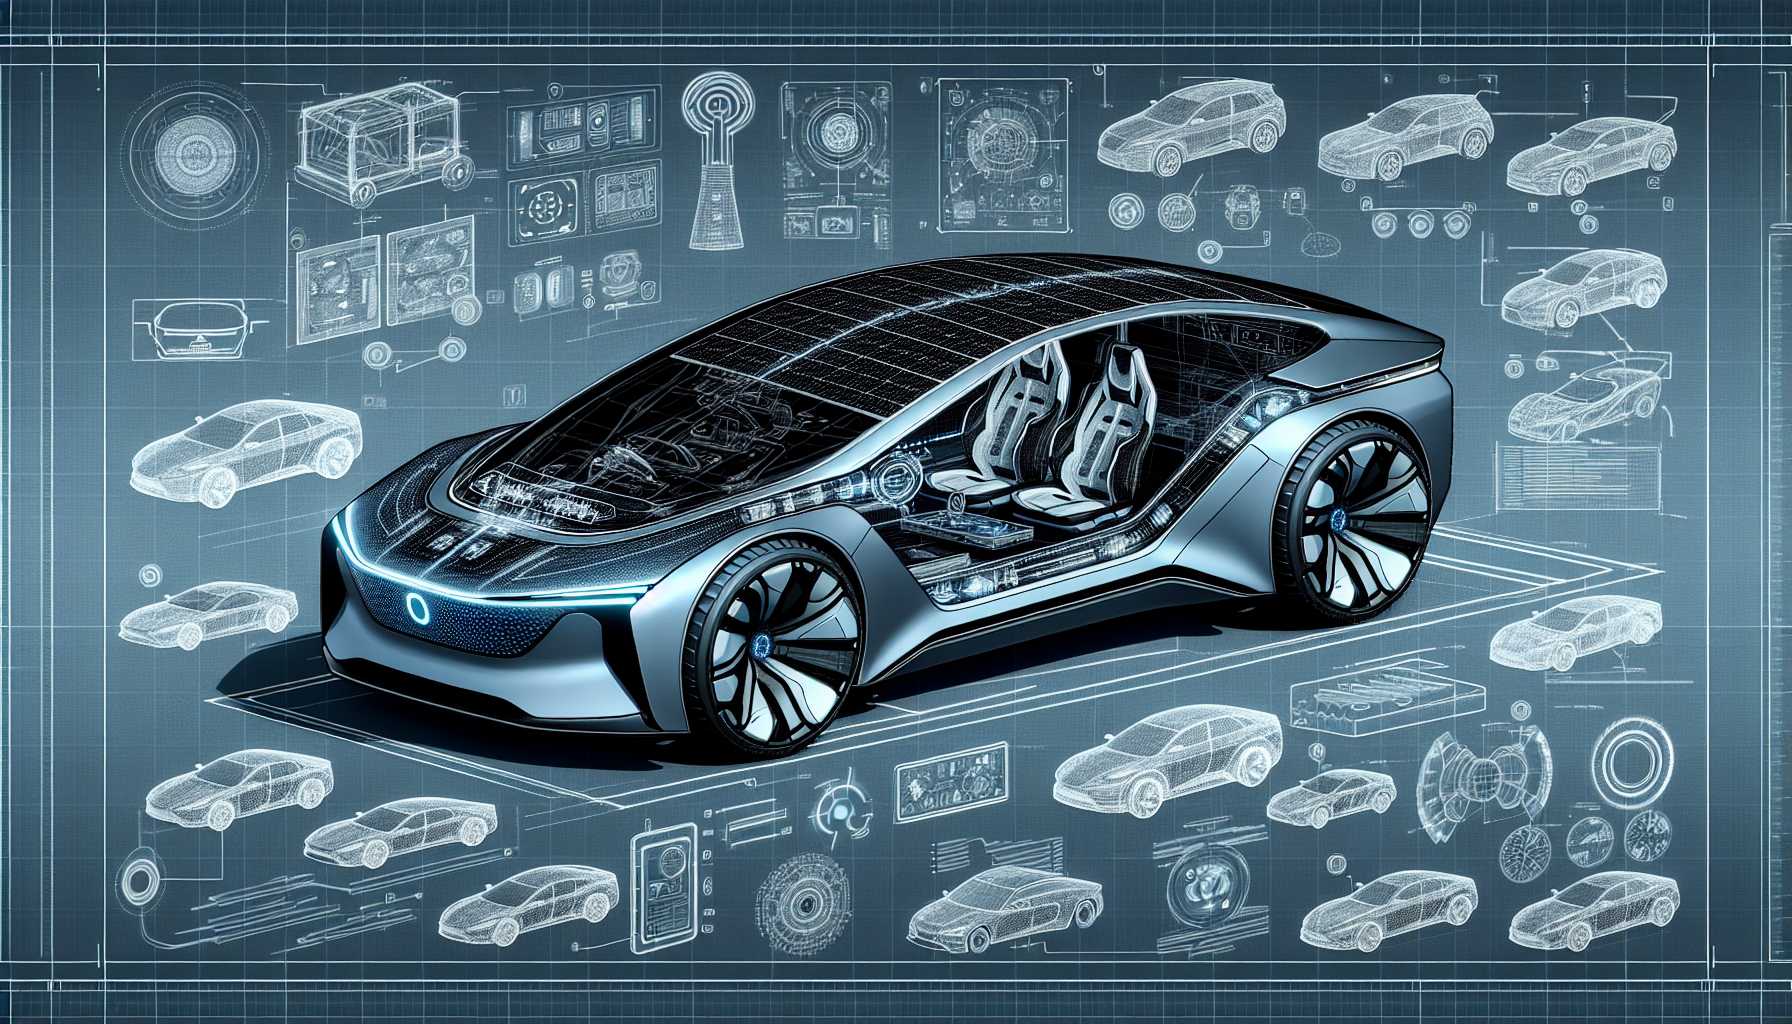 A futuristic car blueprint depicting advanced vehicle technology